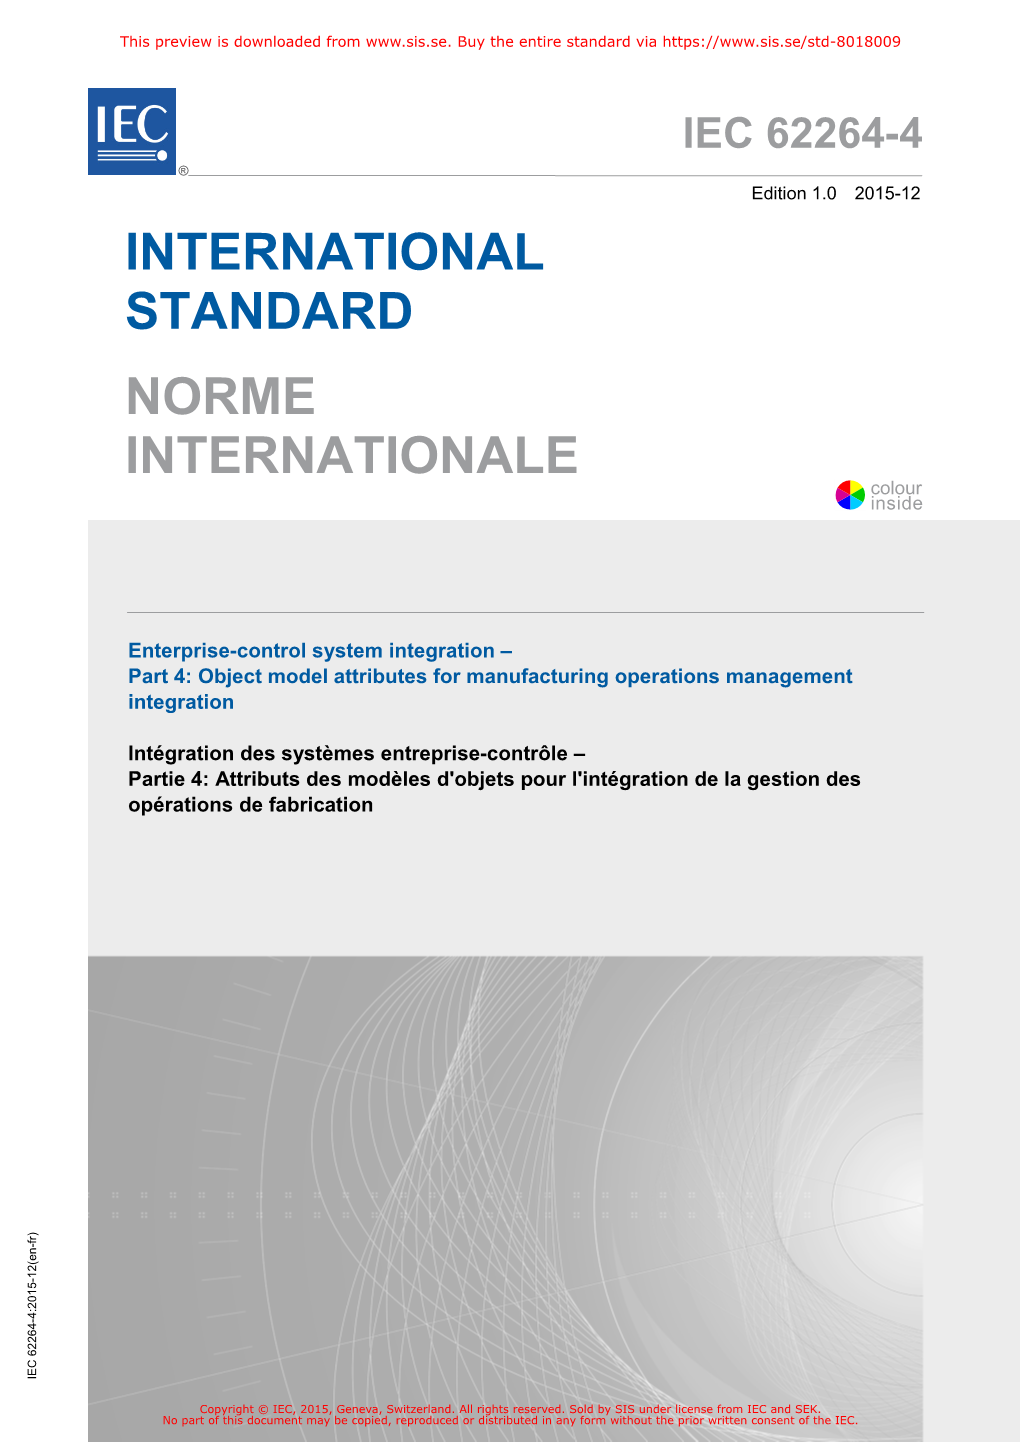 IEC 62264-4 ® Edition 1.0 2015-12 INTERNATIONAL STANDARD NORME